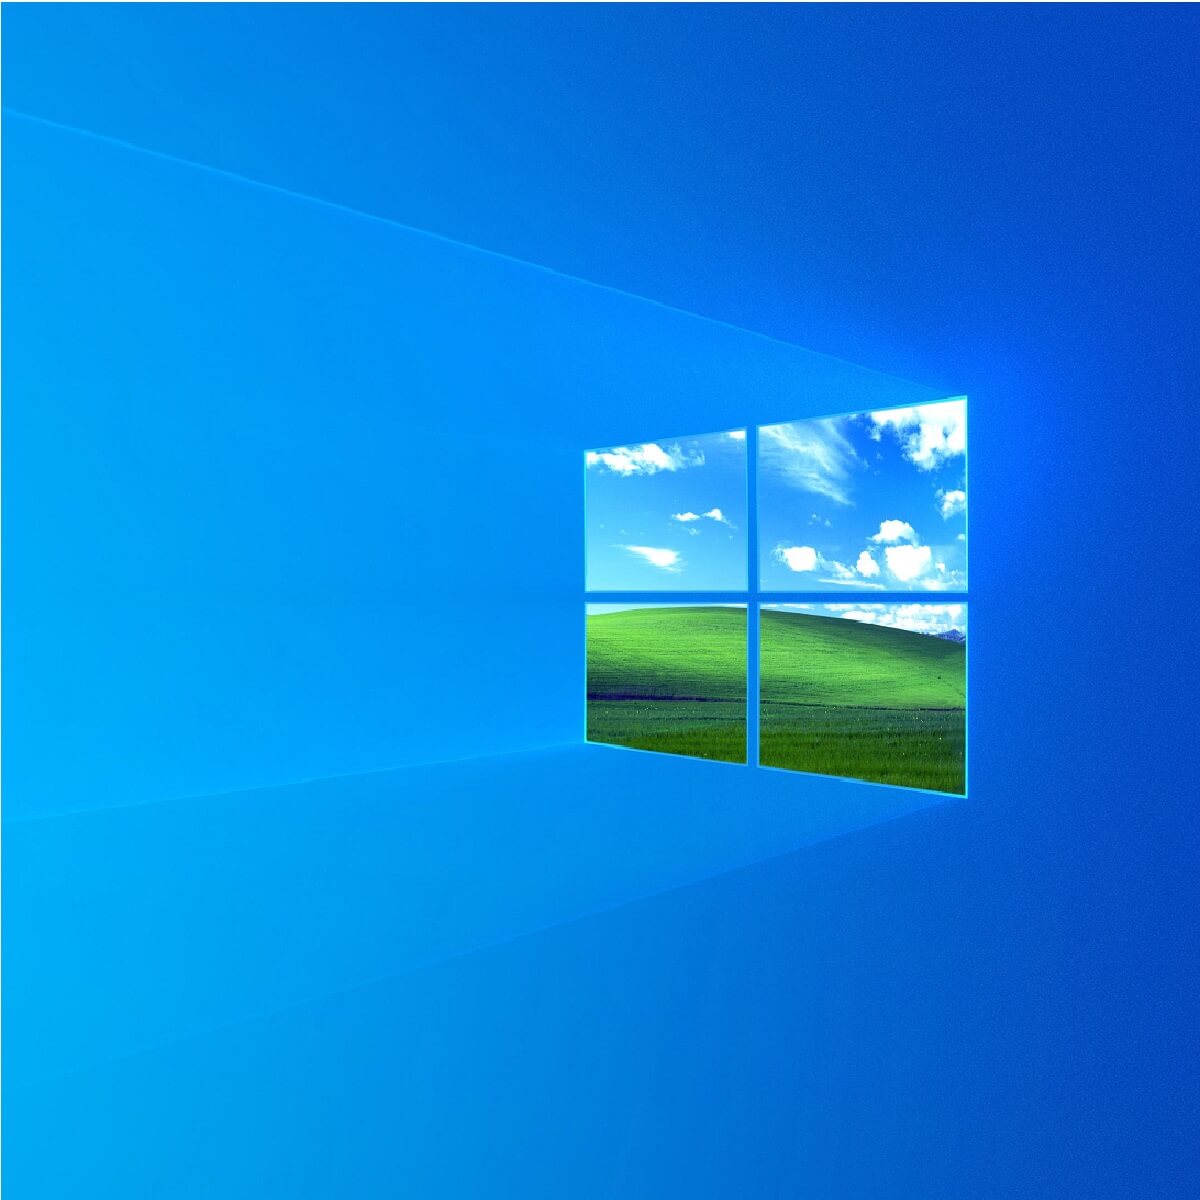 Windows 10 active hours